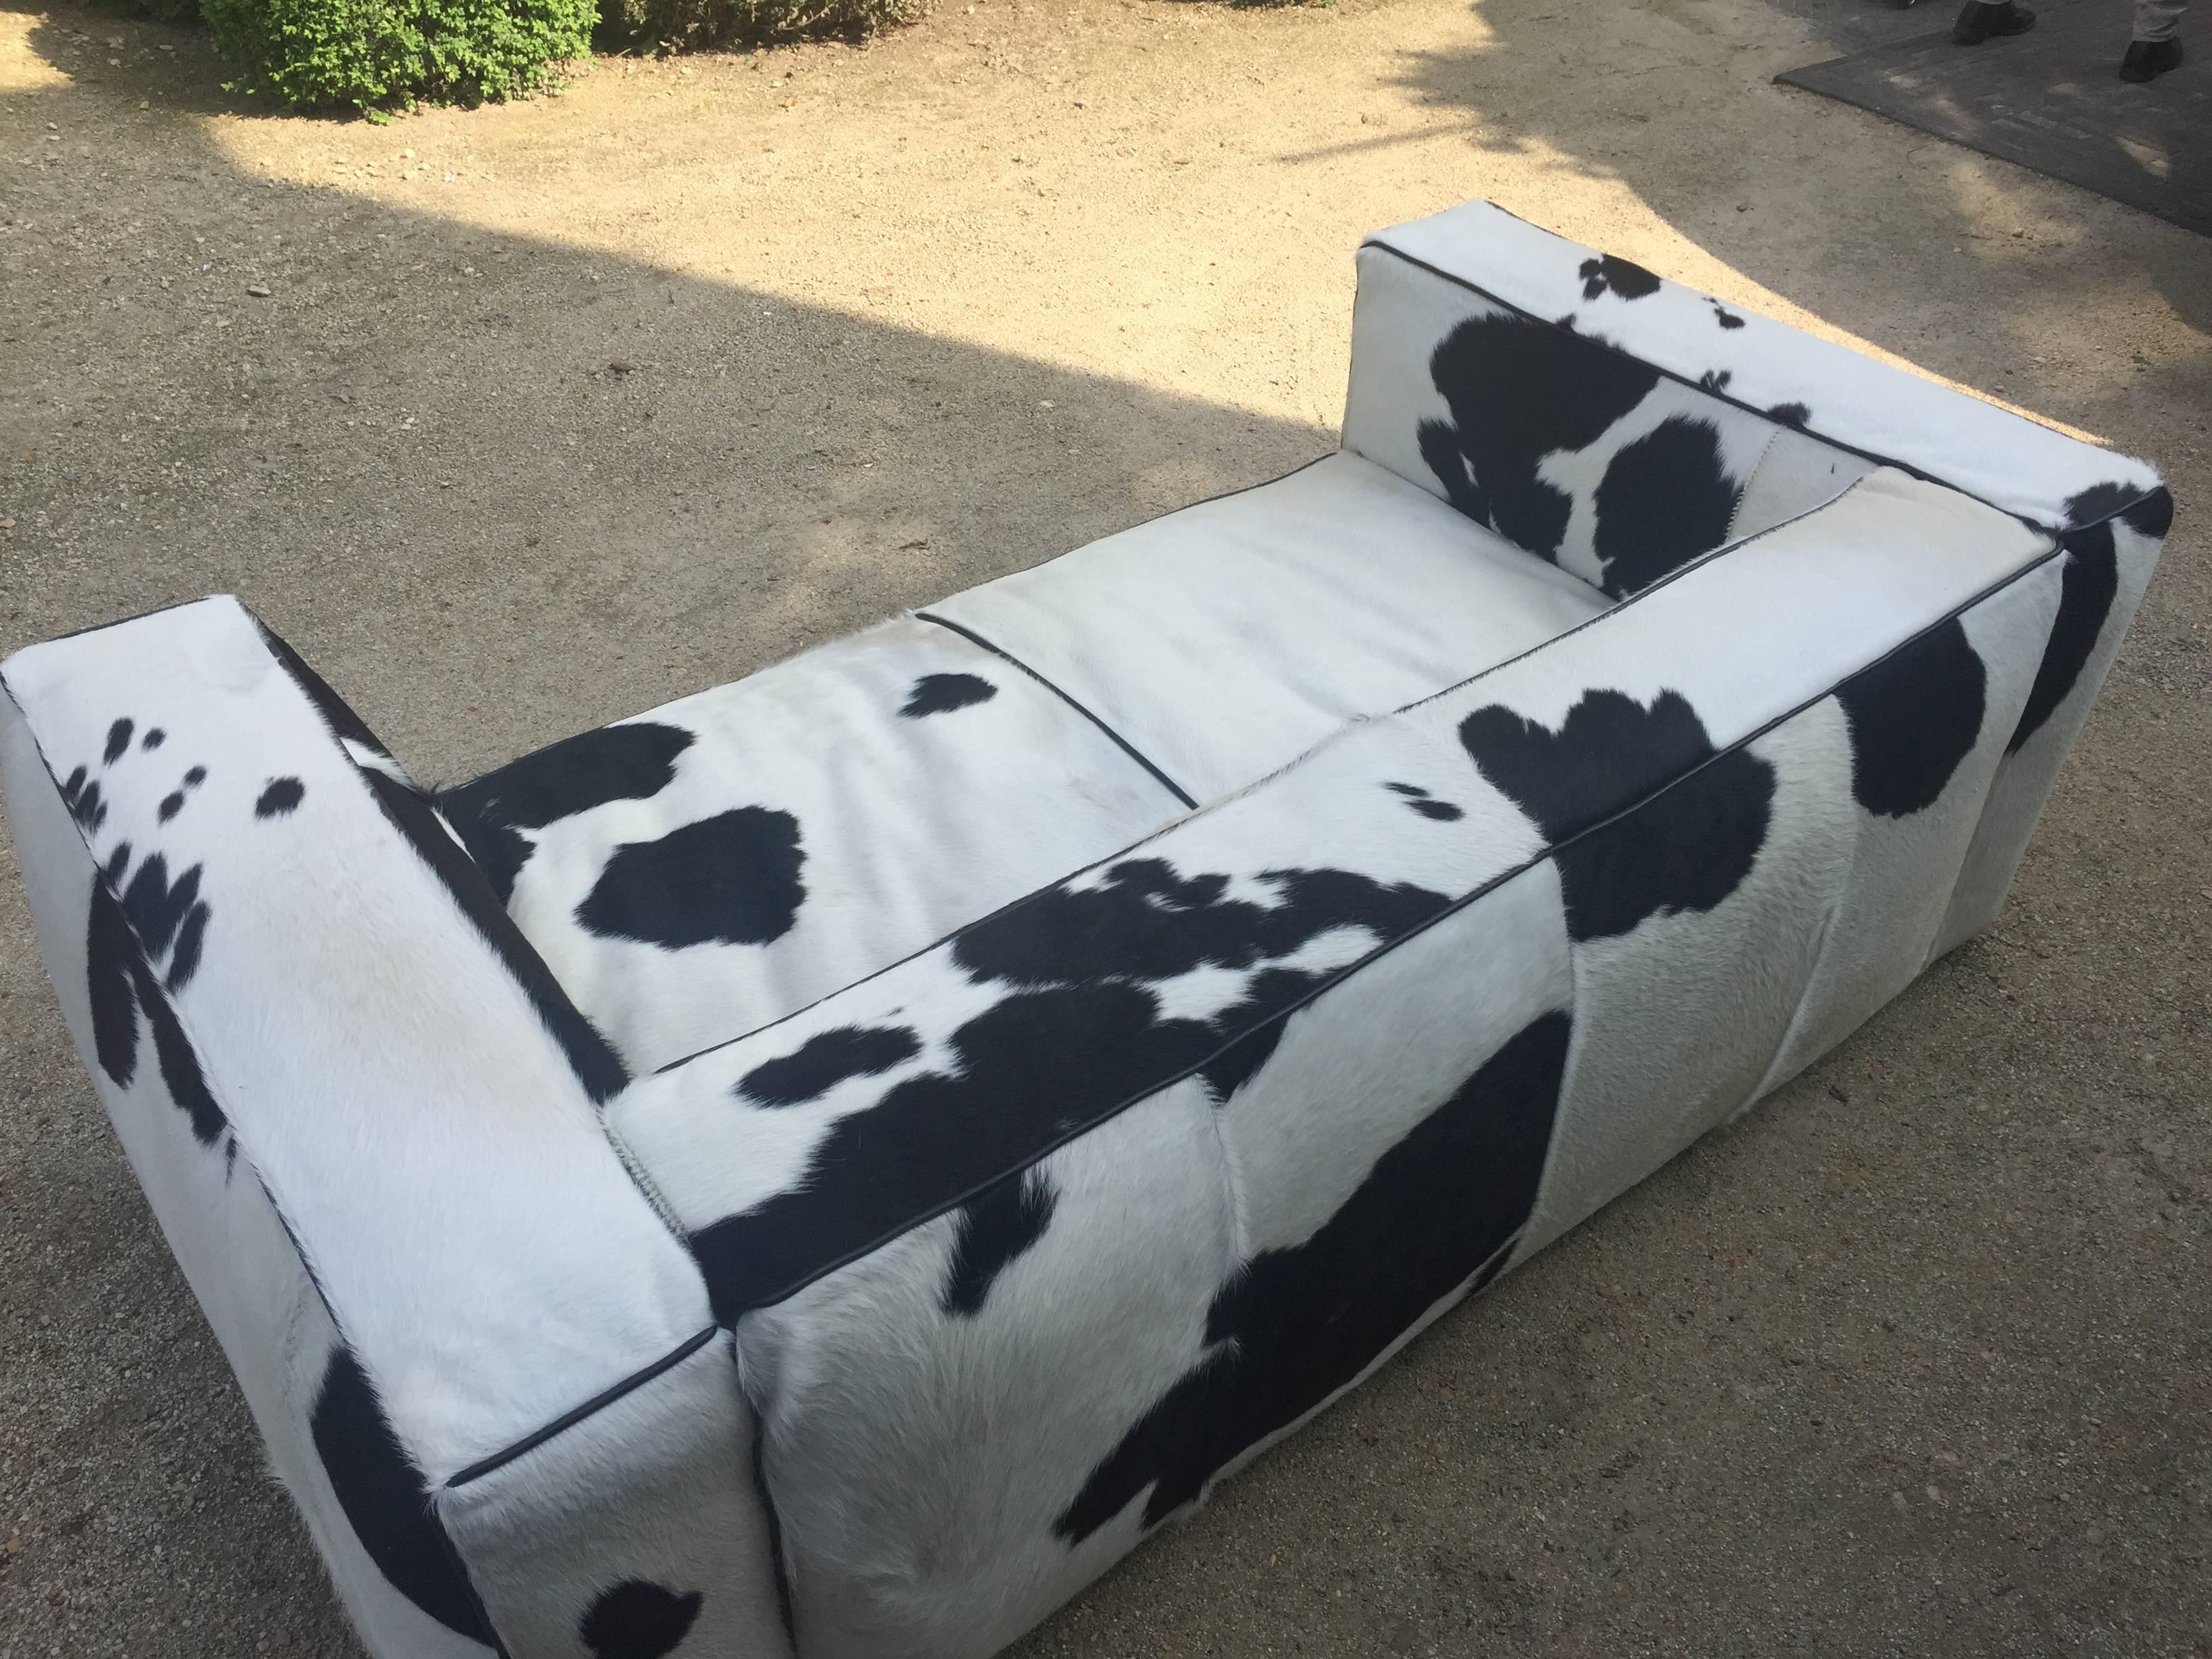 cow sofa